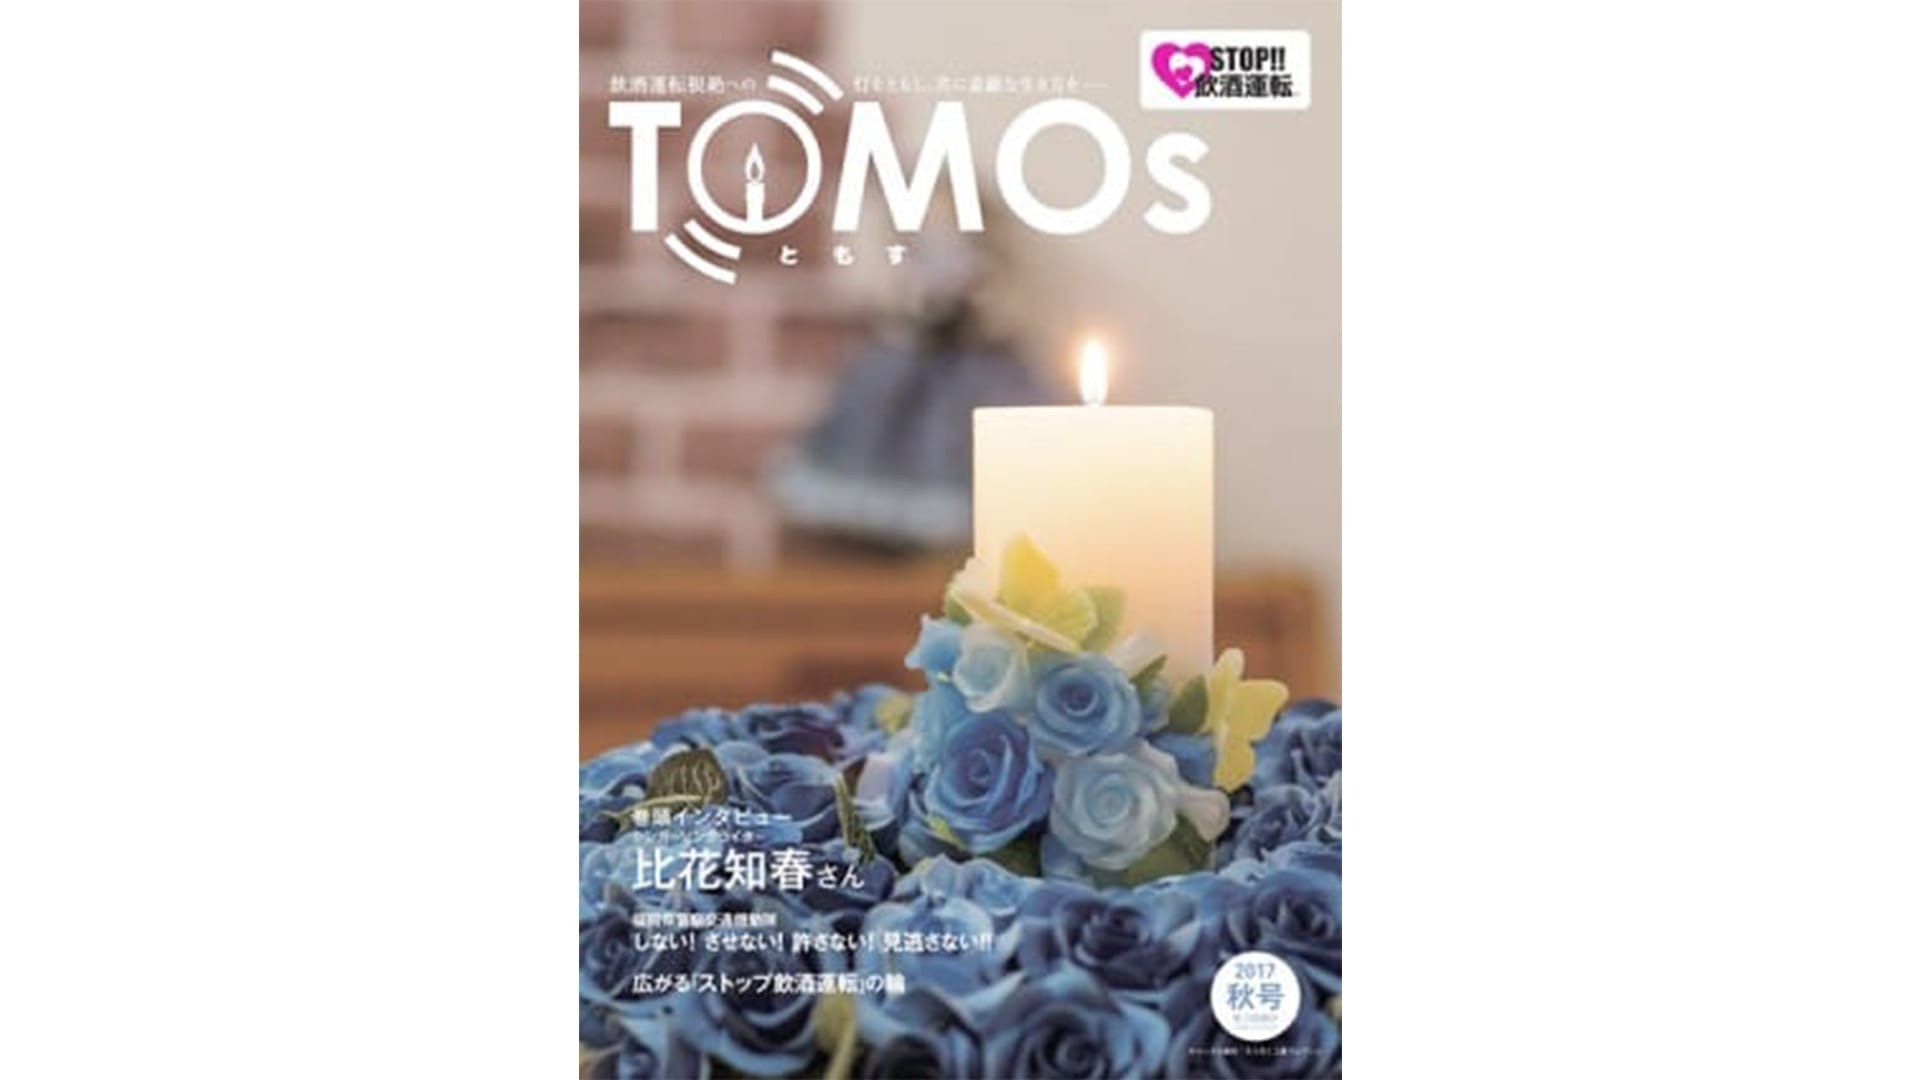 TOMOs vol.02 シンガーソングライター 比花知春さんインタビュー